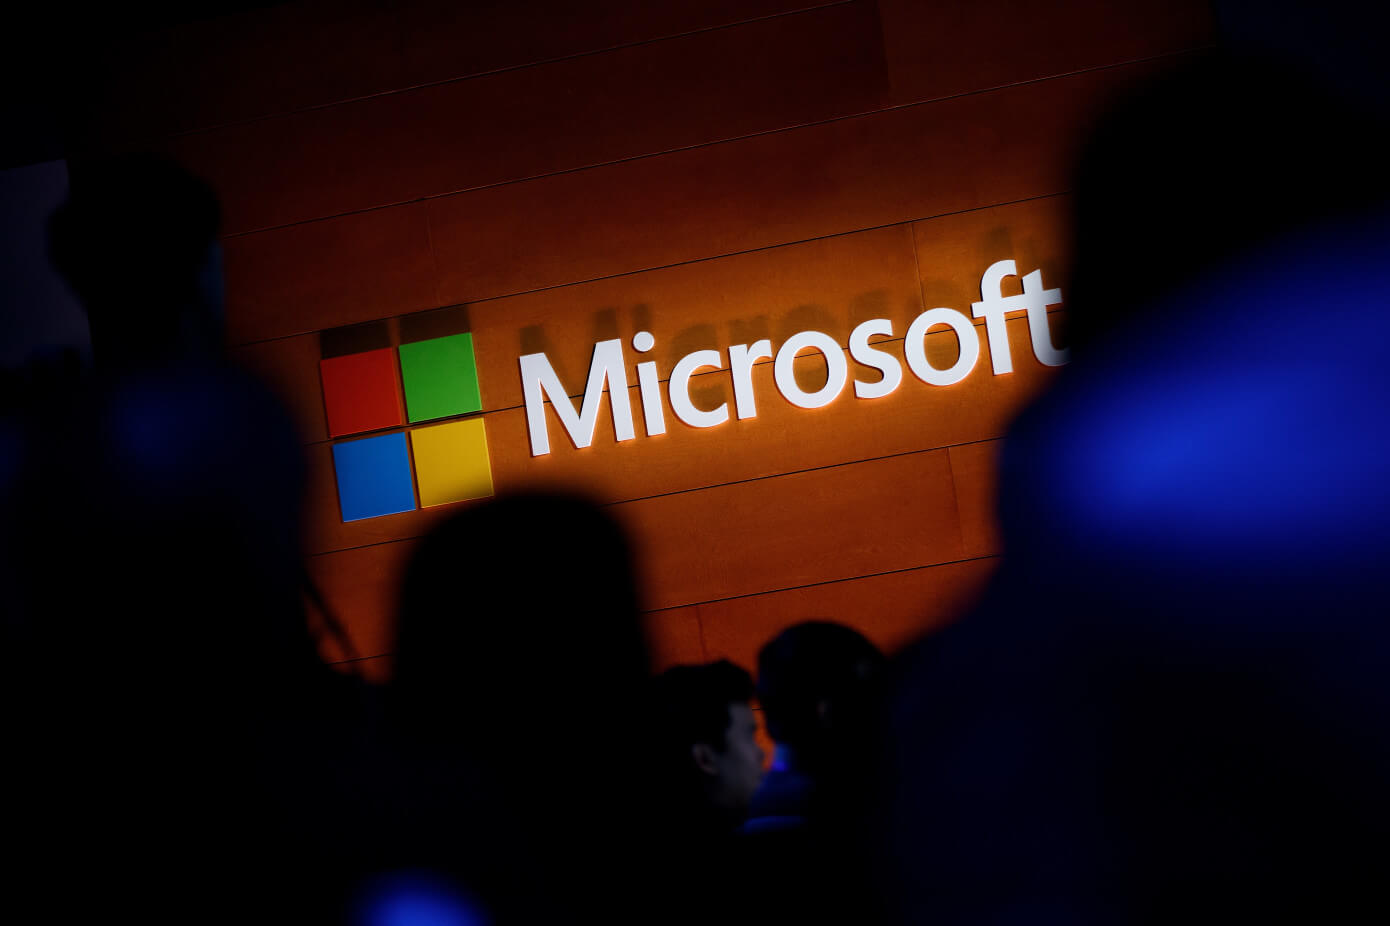 Microsoft: Hackers access customer accounts